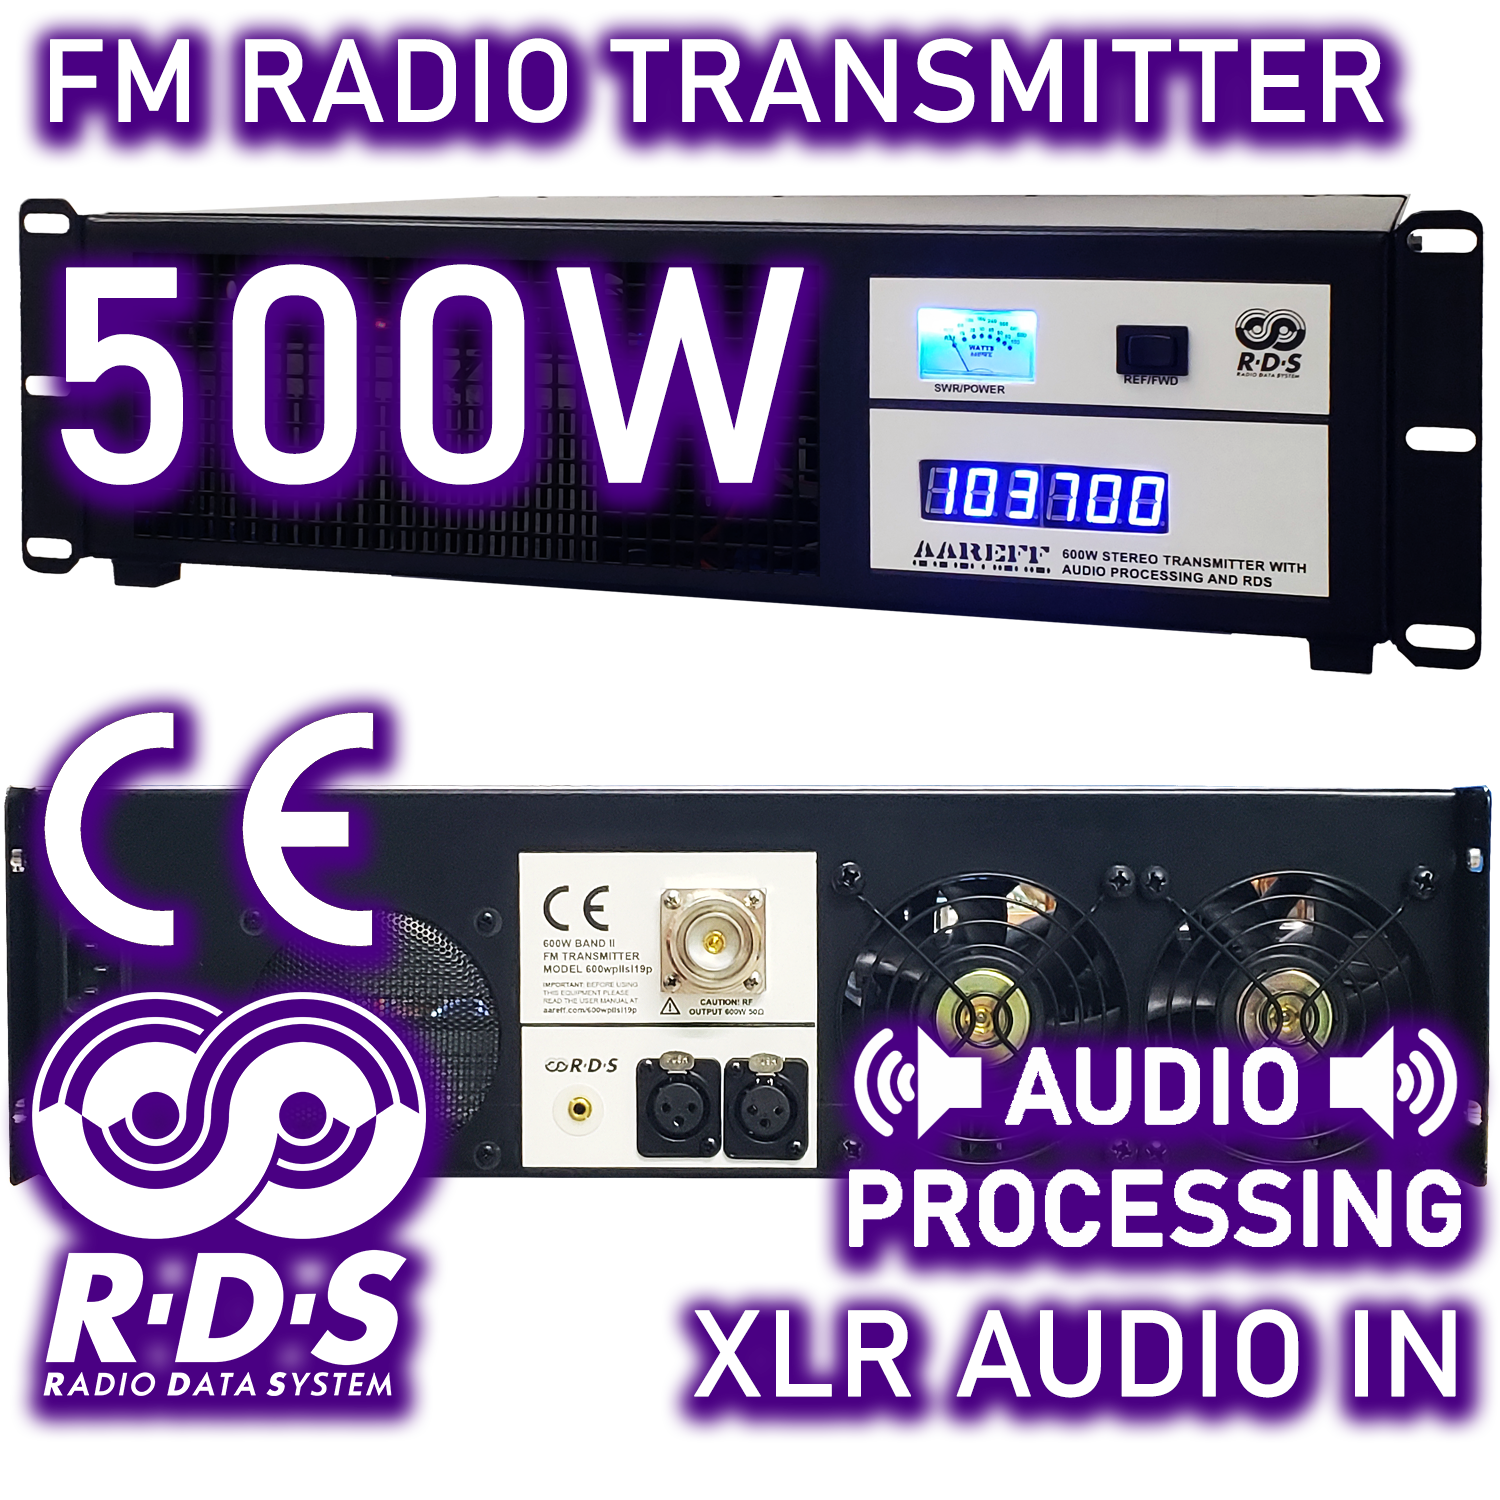 Basic Facts about FM Radio Transmitter